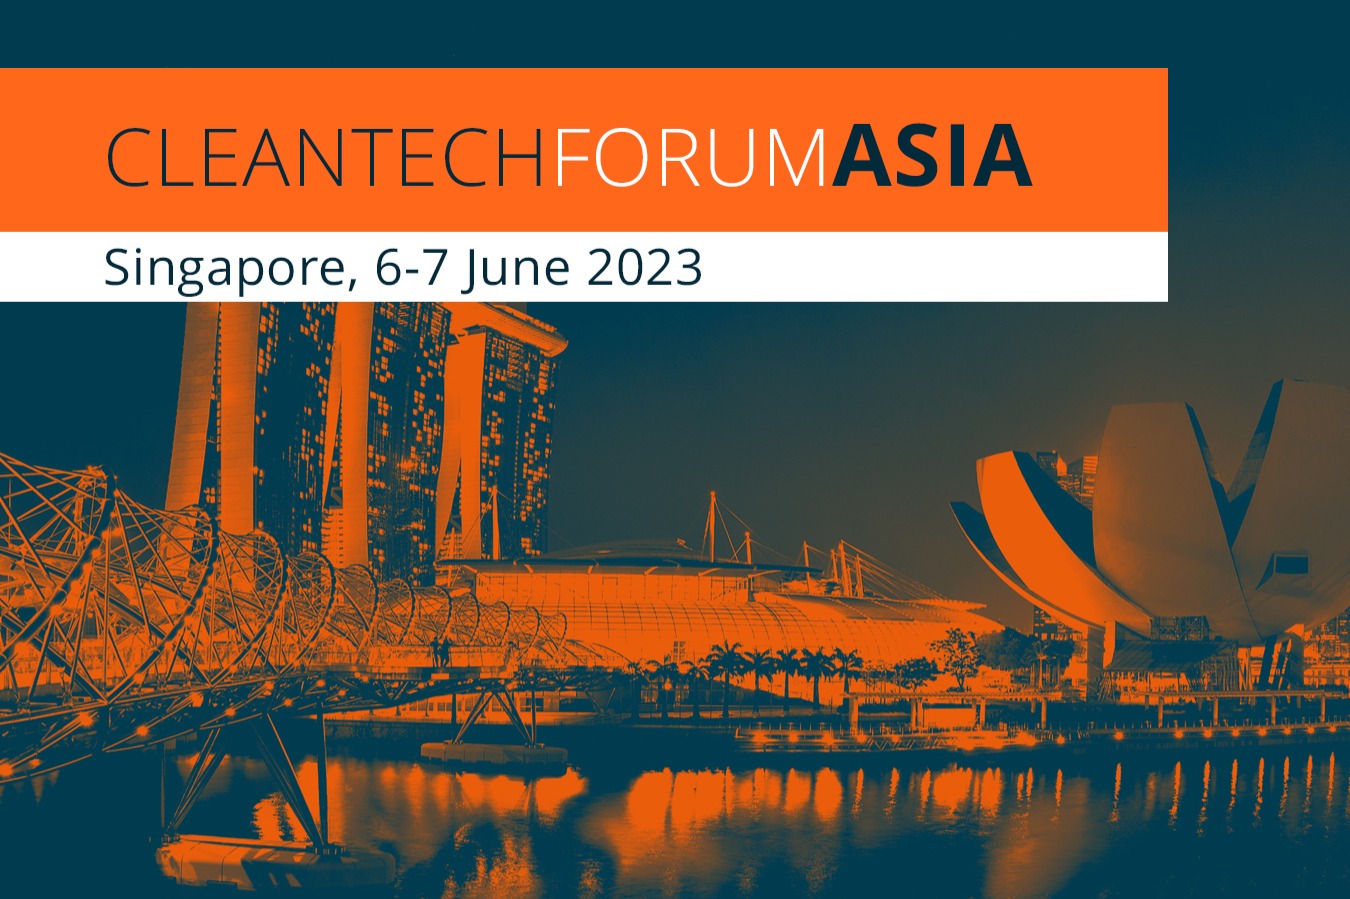 Cleantech Forum Asia 2023